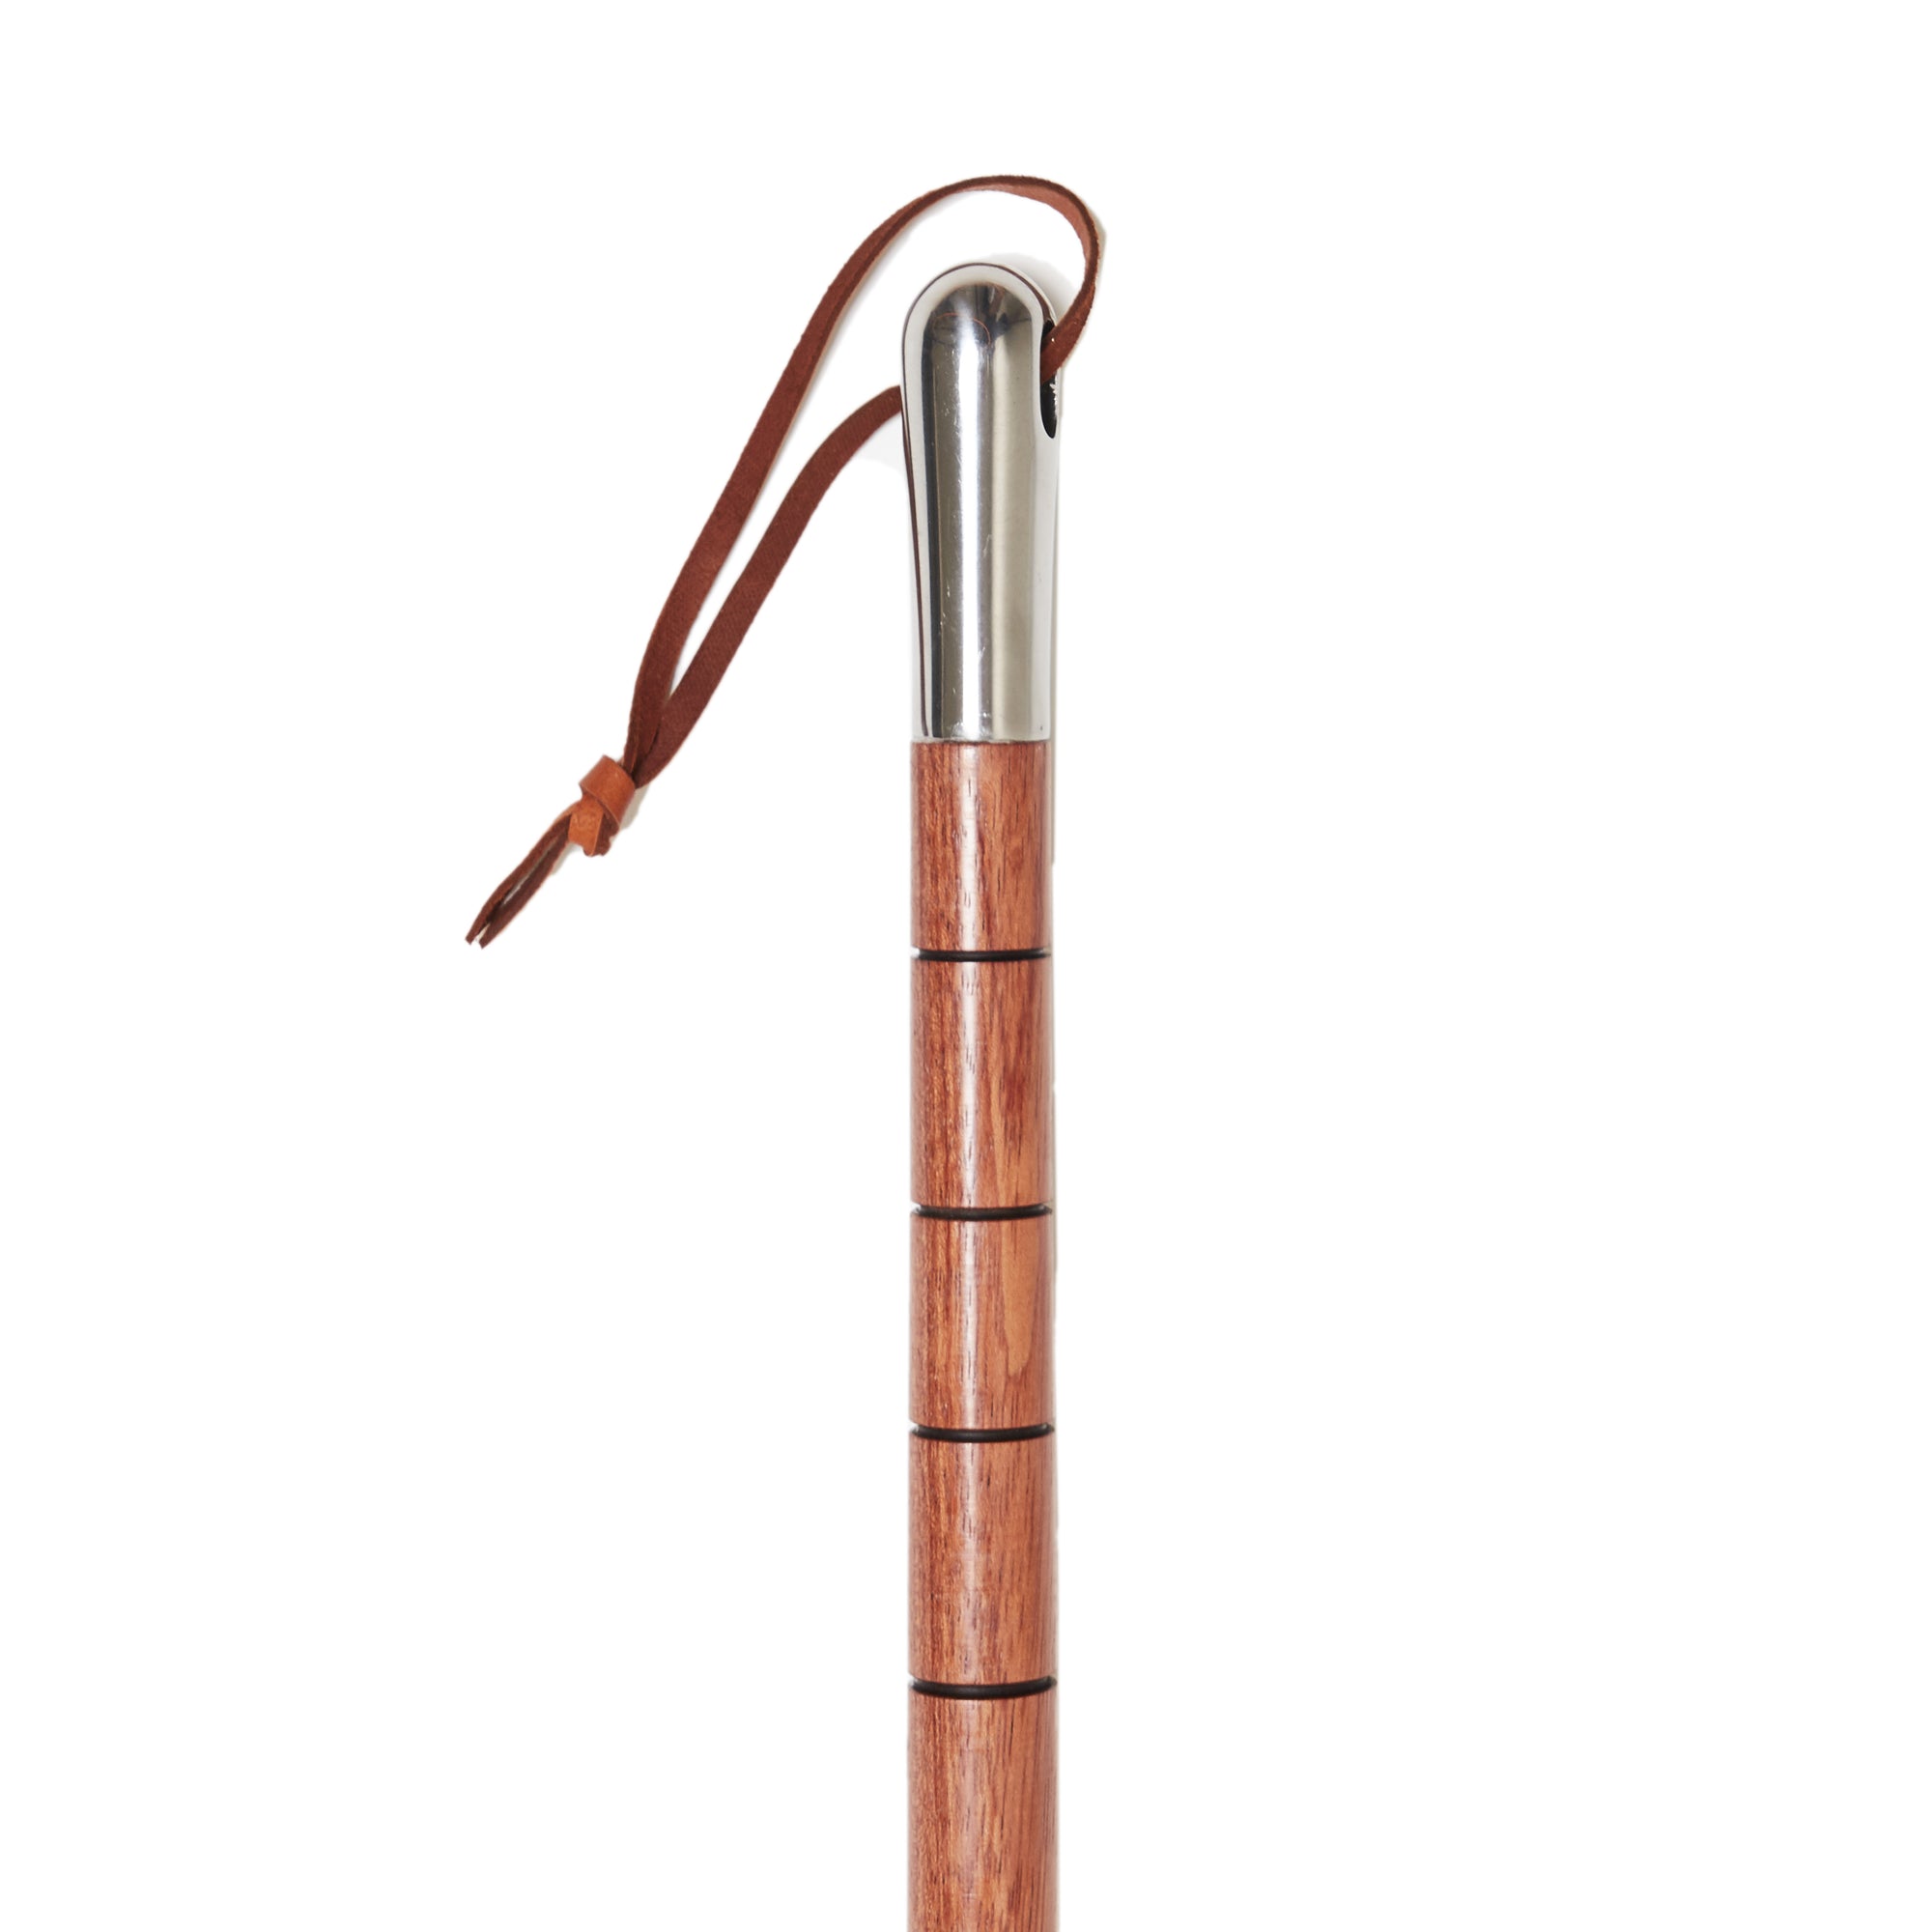 A KirbyAllison.com Hanger Project Bubinga Full-Length Shoe Horn with a metal handle.